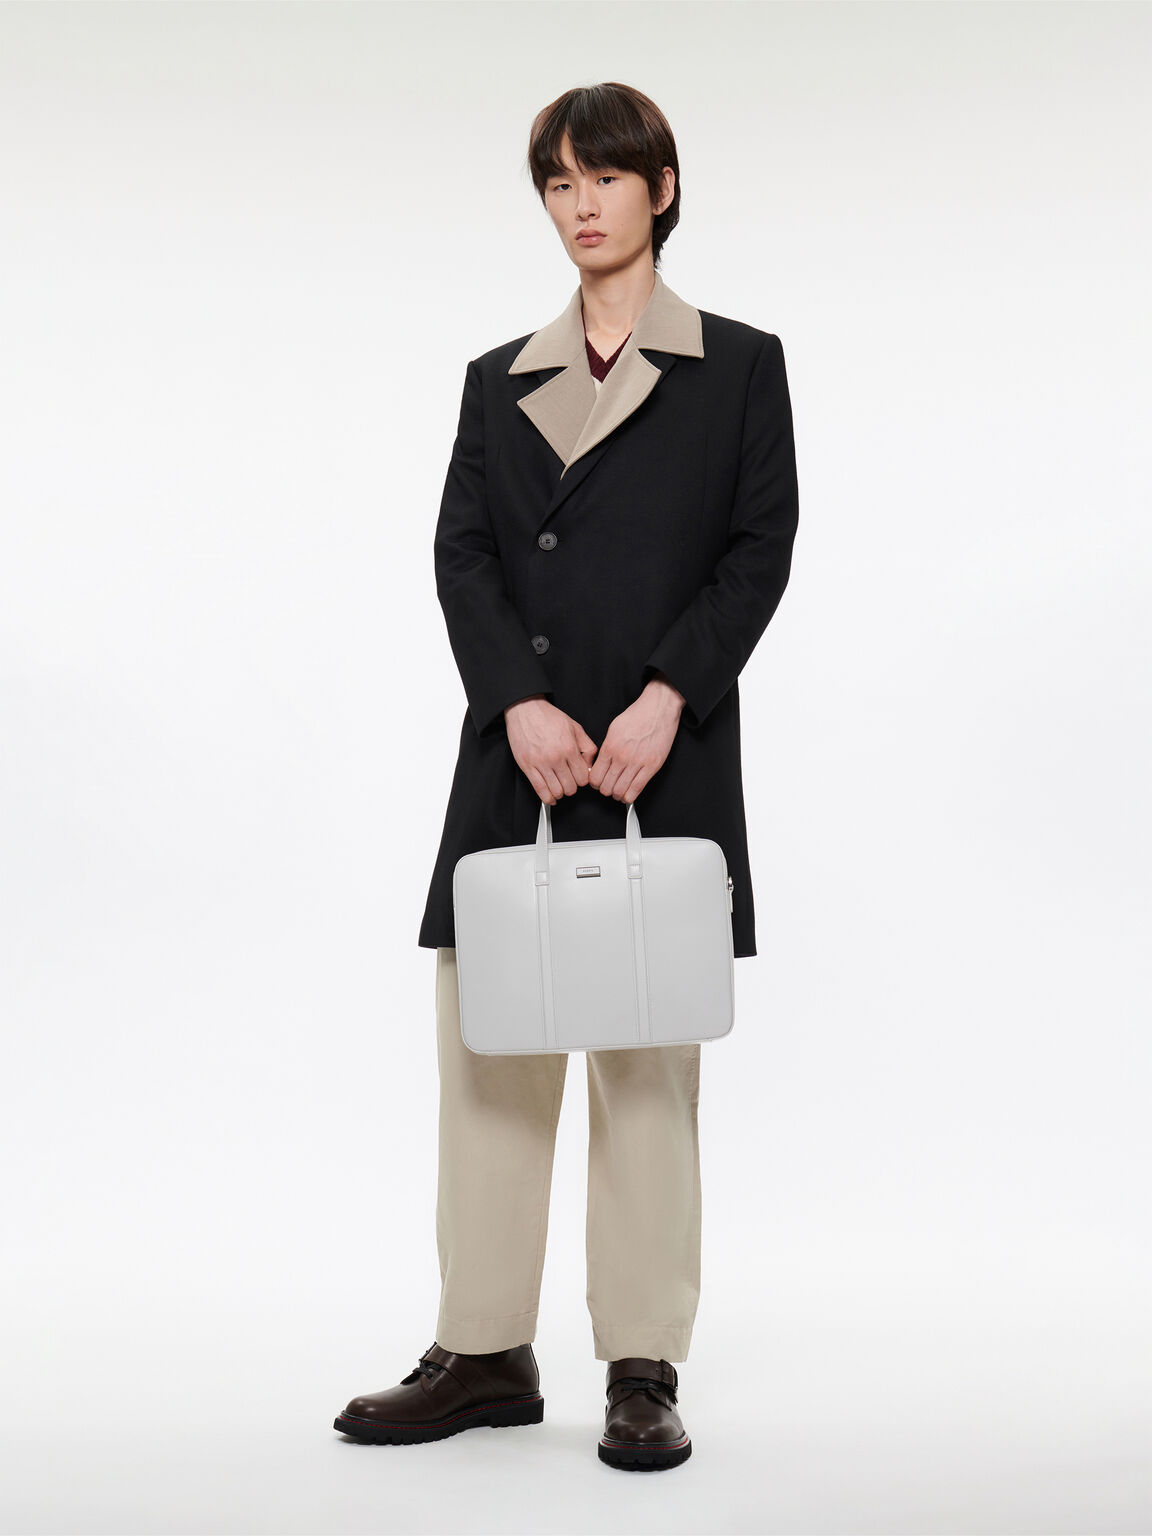 Allen Leather Briefcase, Light Grey, hi-res